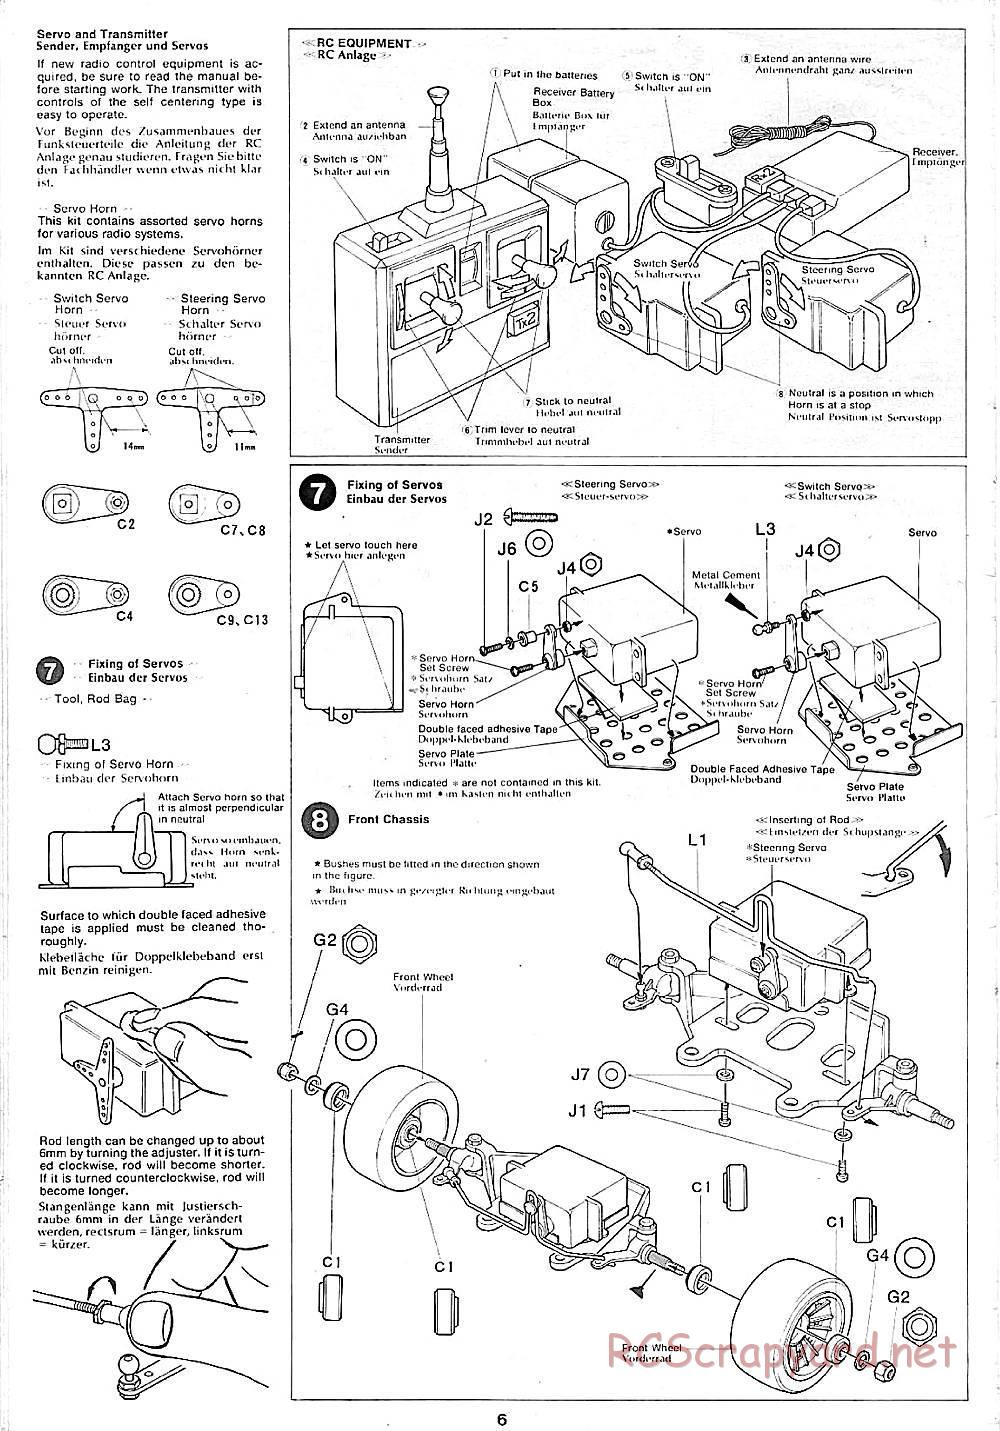 Tamiya - Ralt RT2 Hart 420R (F2) - 58018 - Manual - Page 6